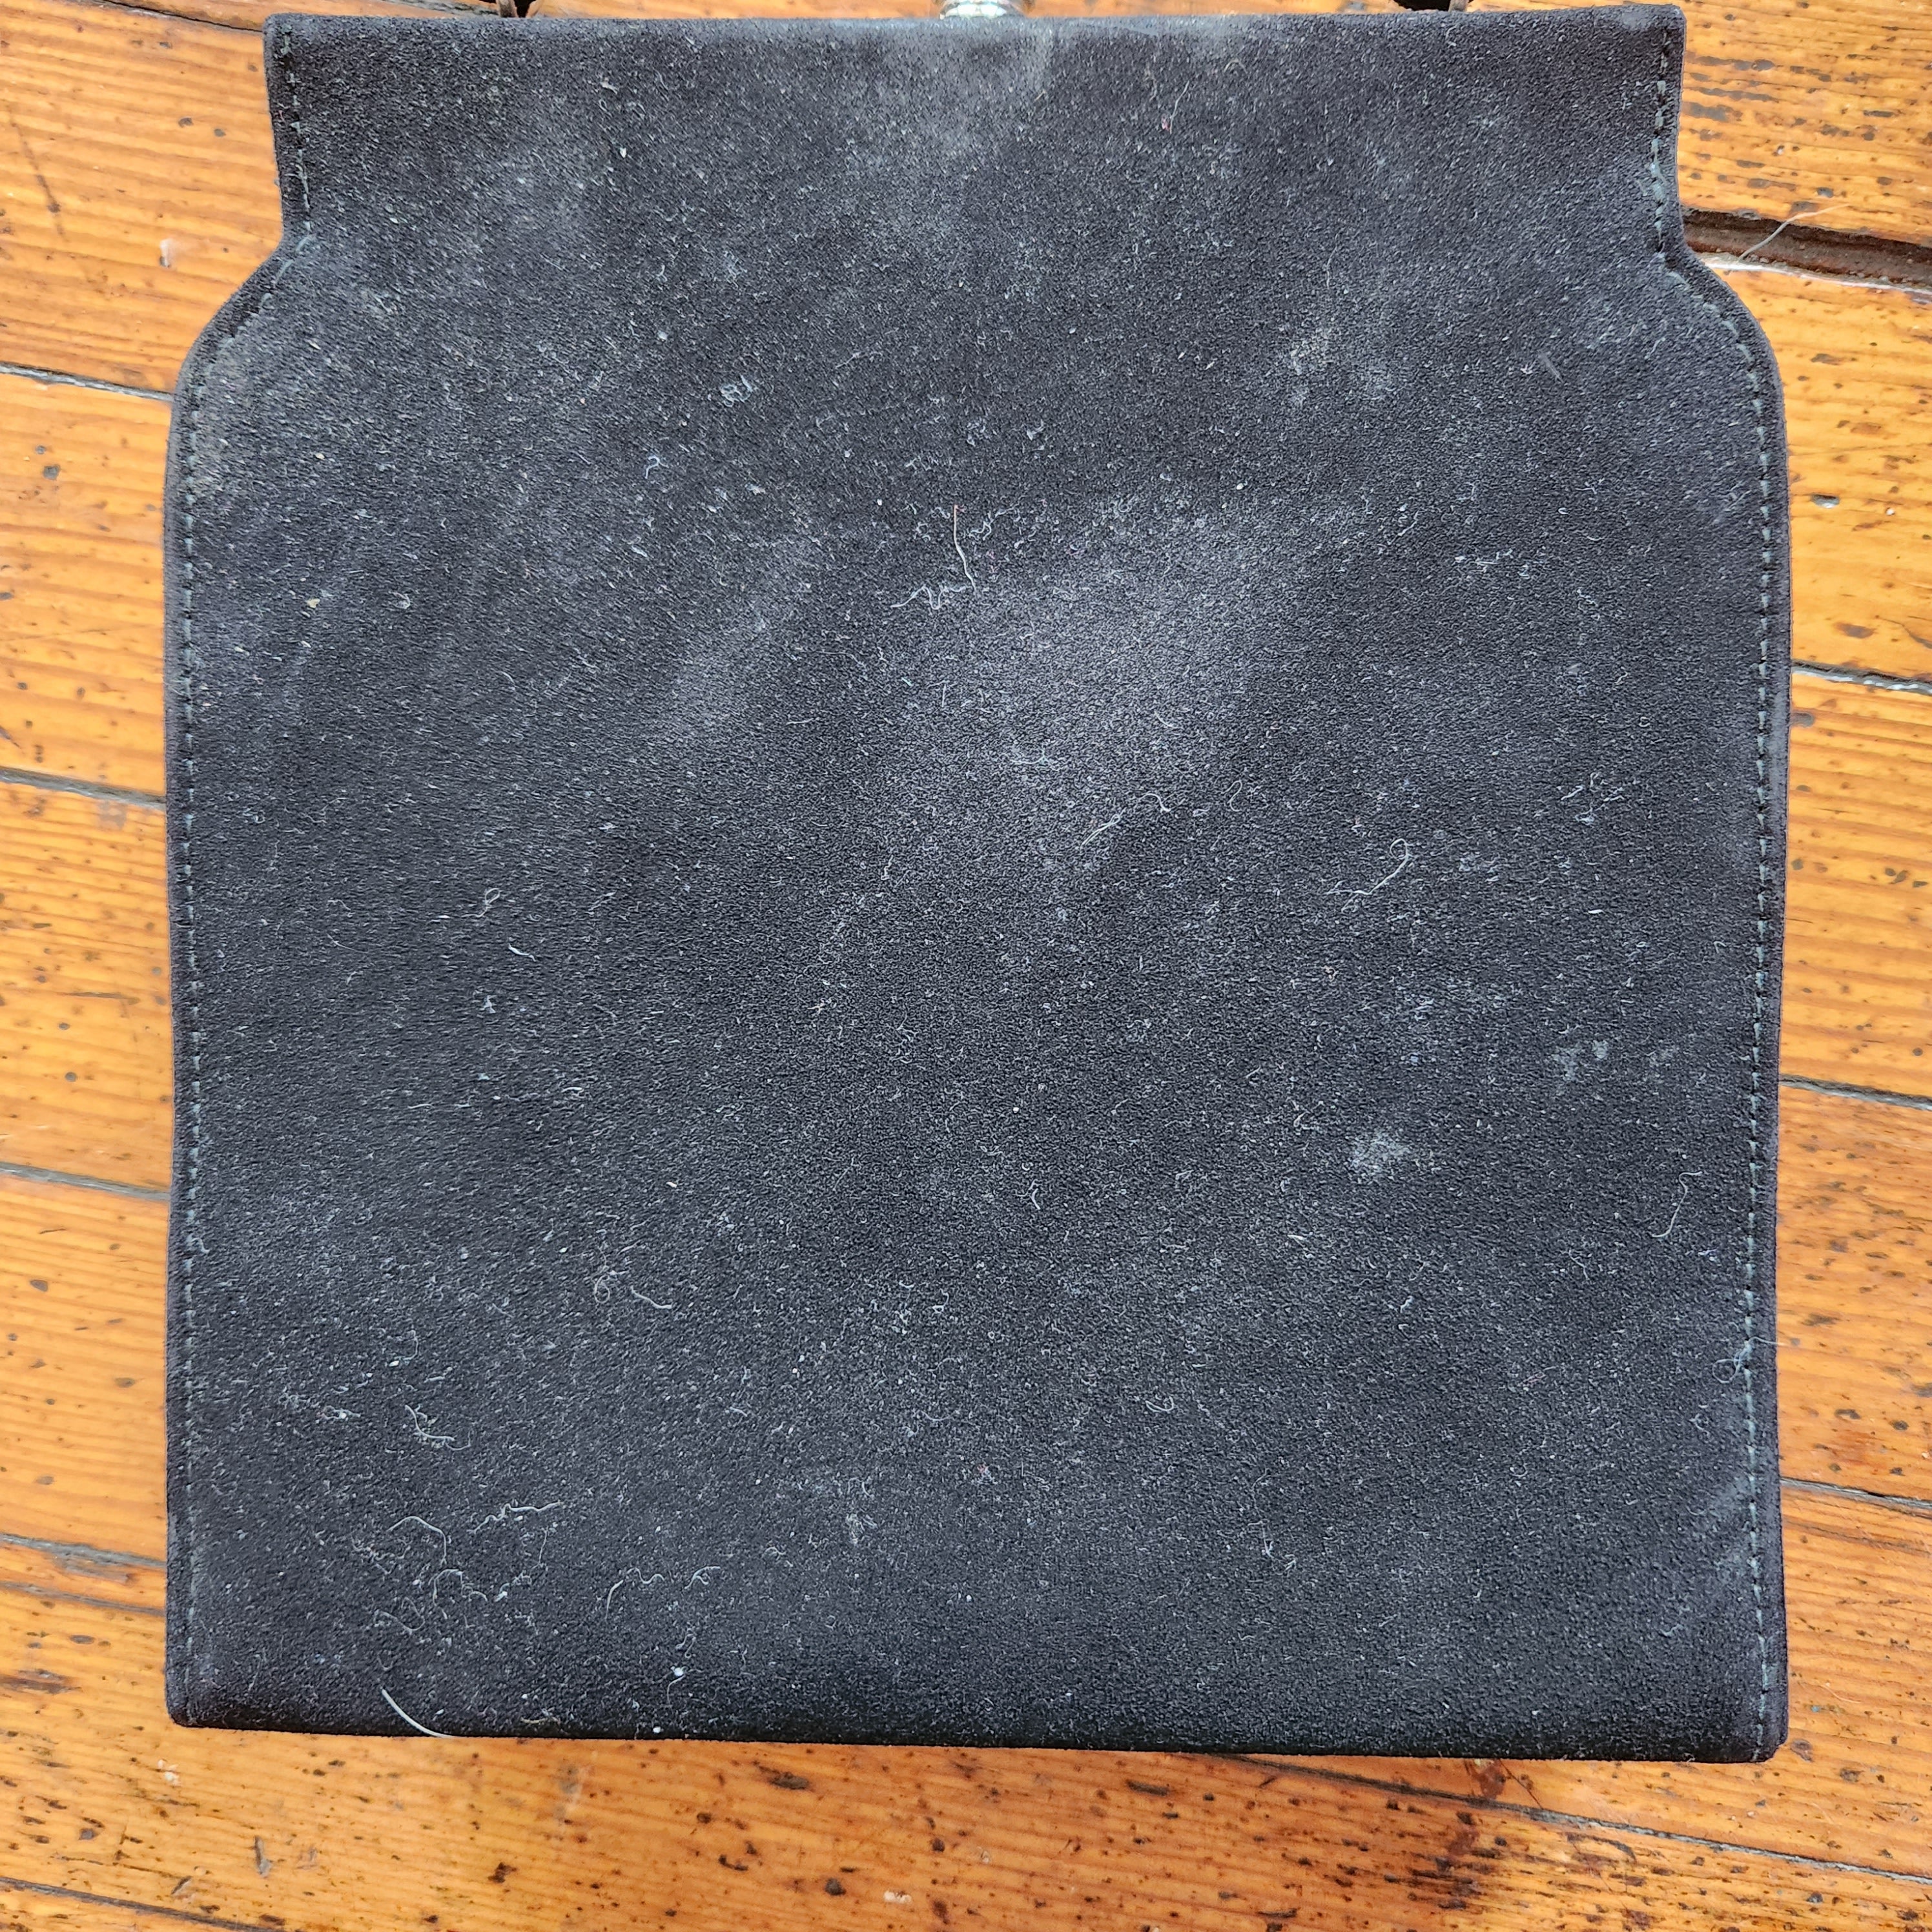 Vintage Black Velvet Rhinestone Clasp Handbag